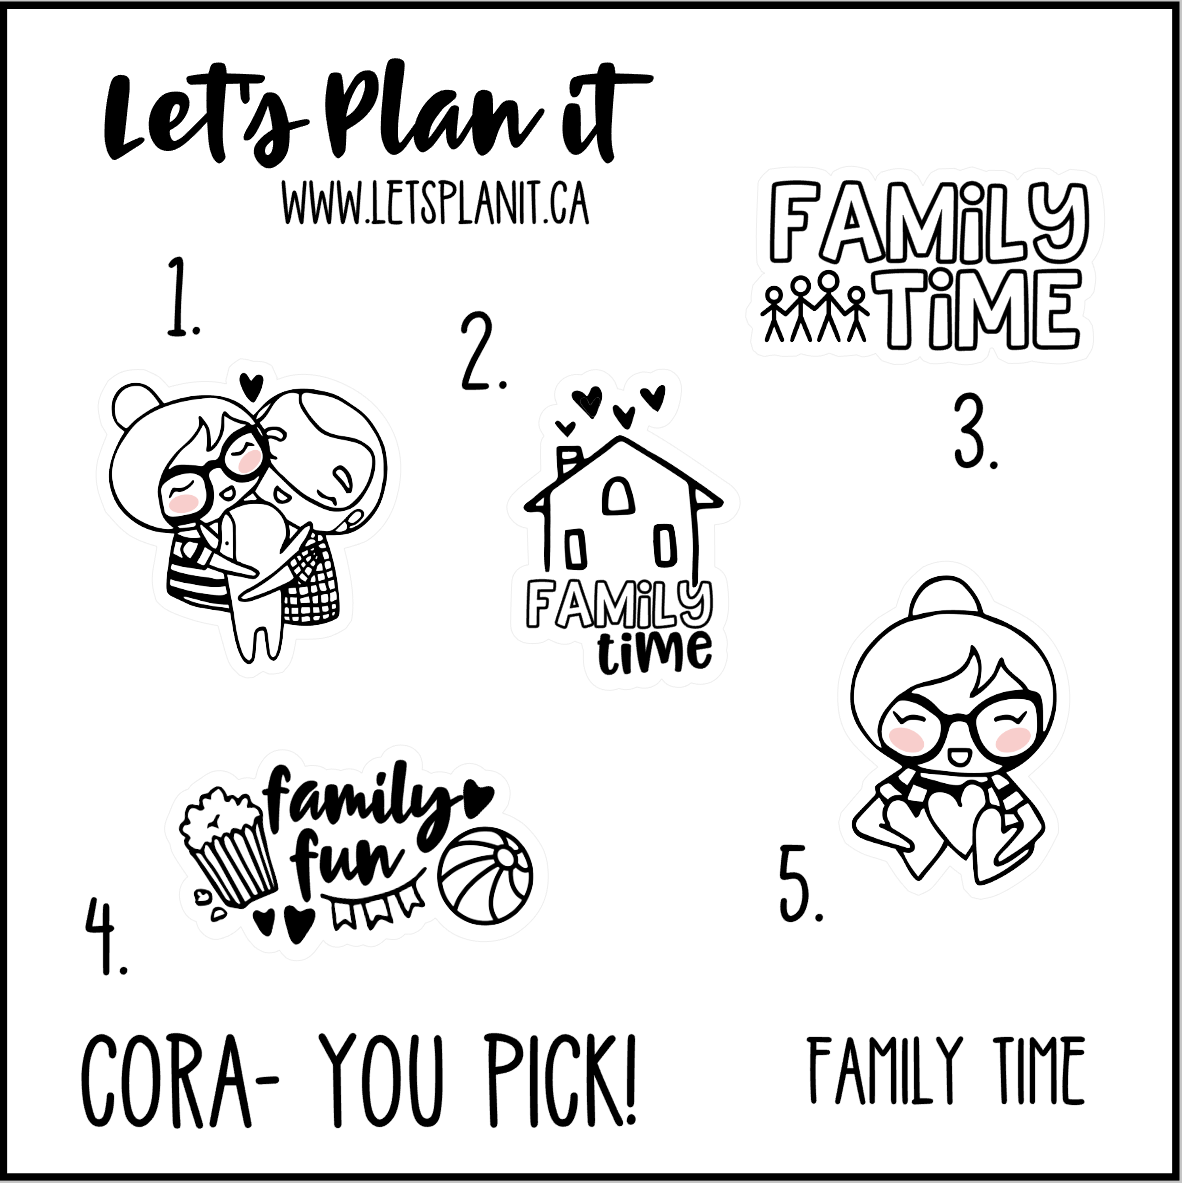 Cora-u-pick- Family